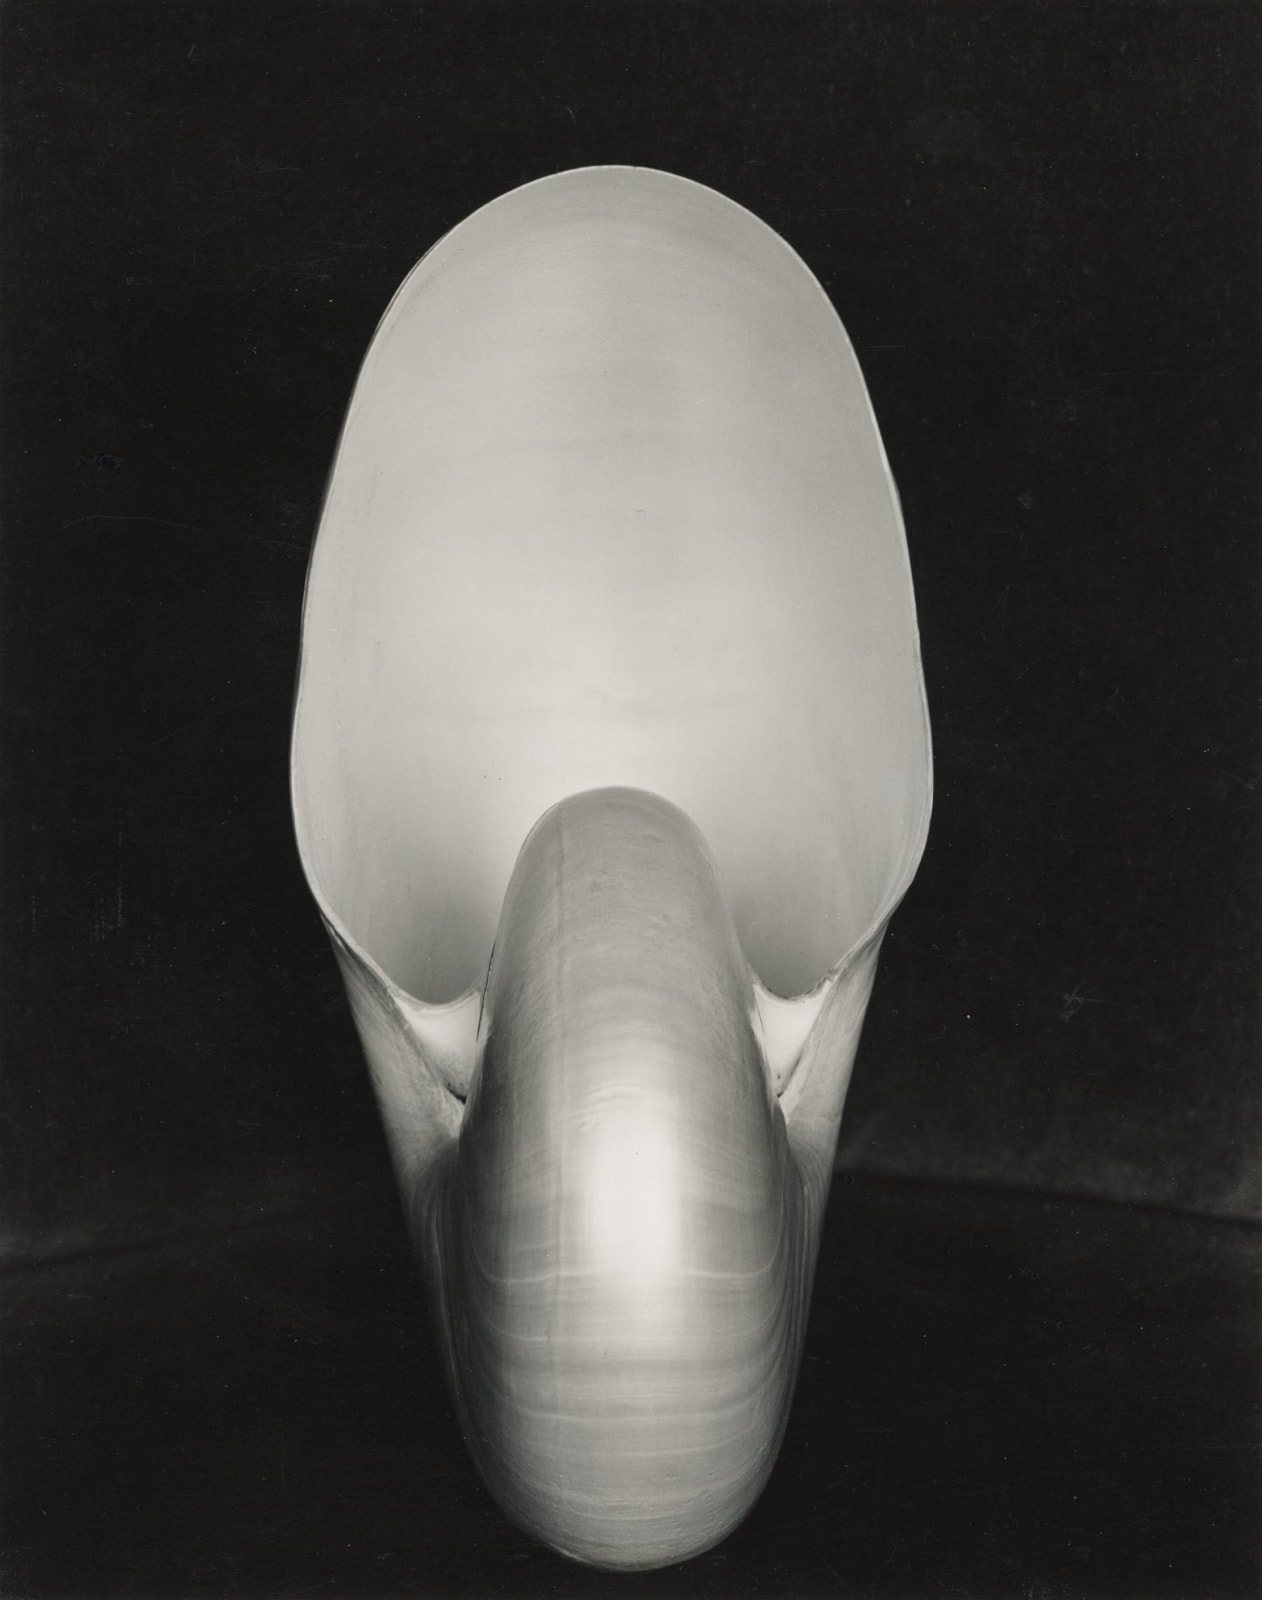 Edward Weston, Shell, 1927, still life of shell on dark background